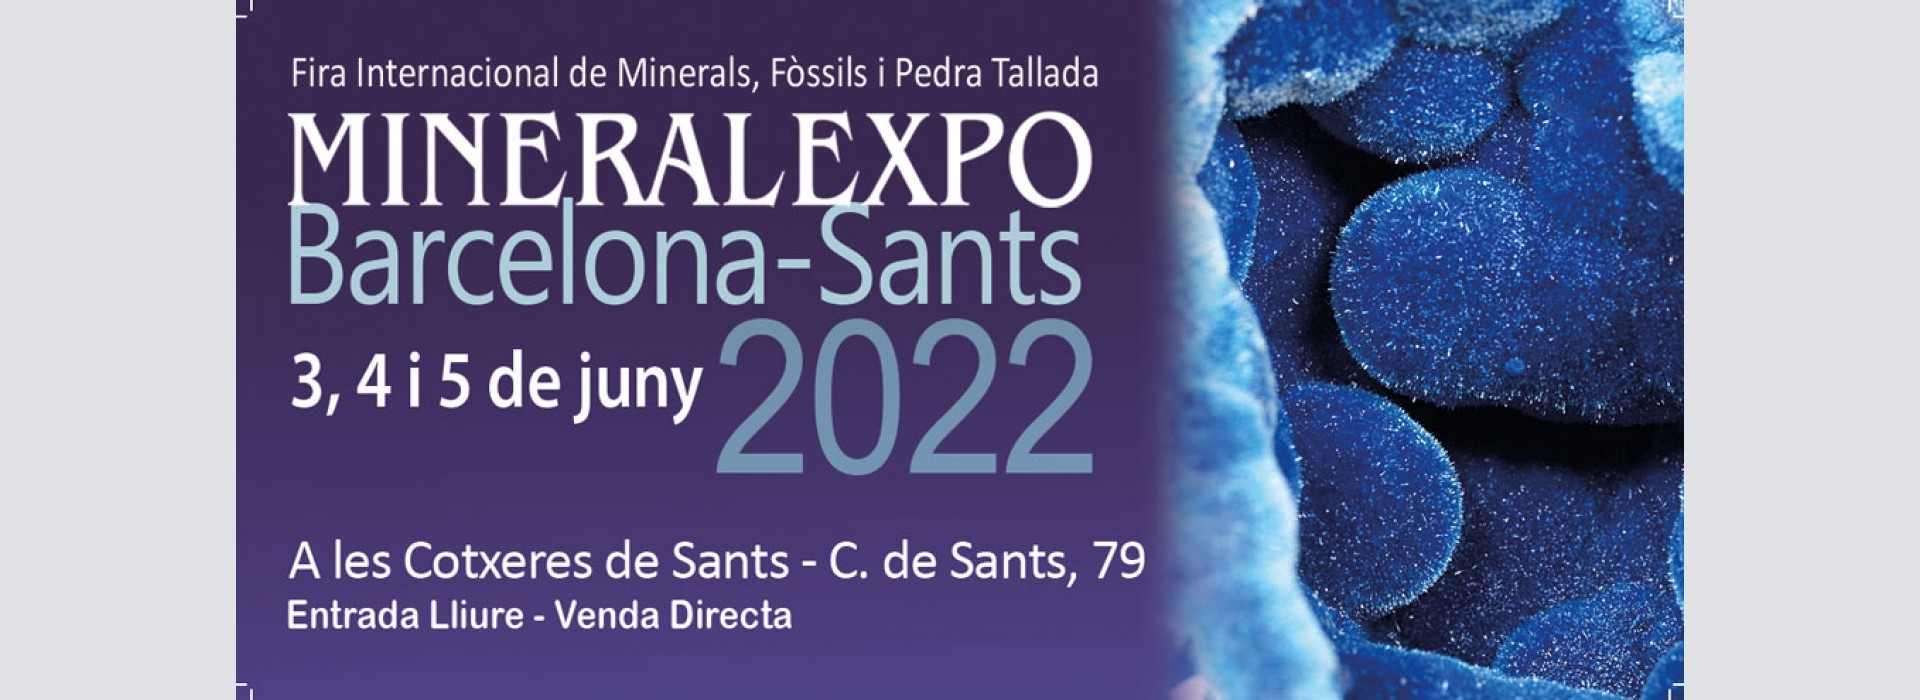 MINERALEXPO Barcelona-Sants 2022